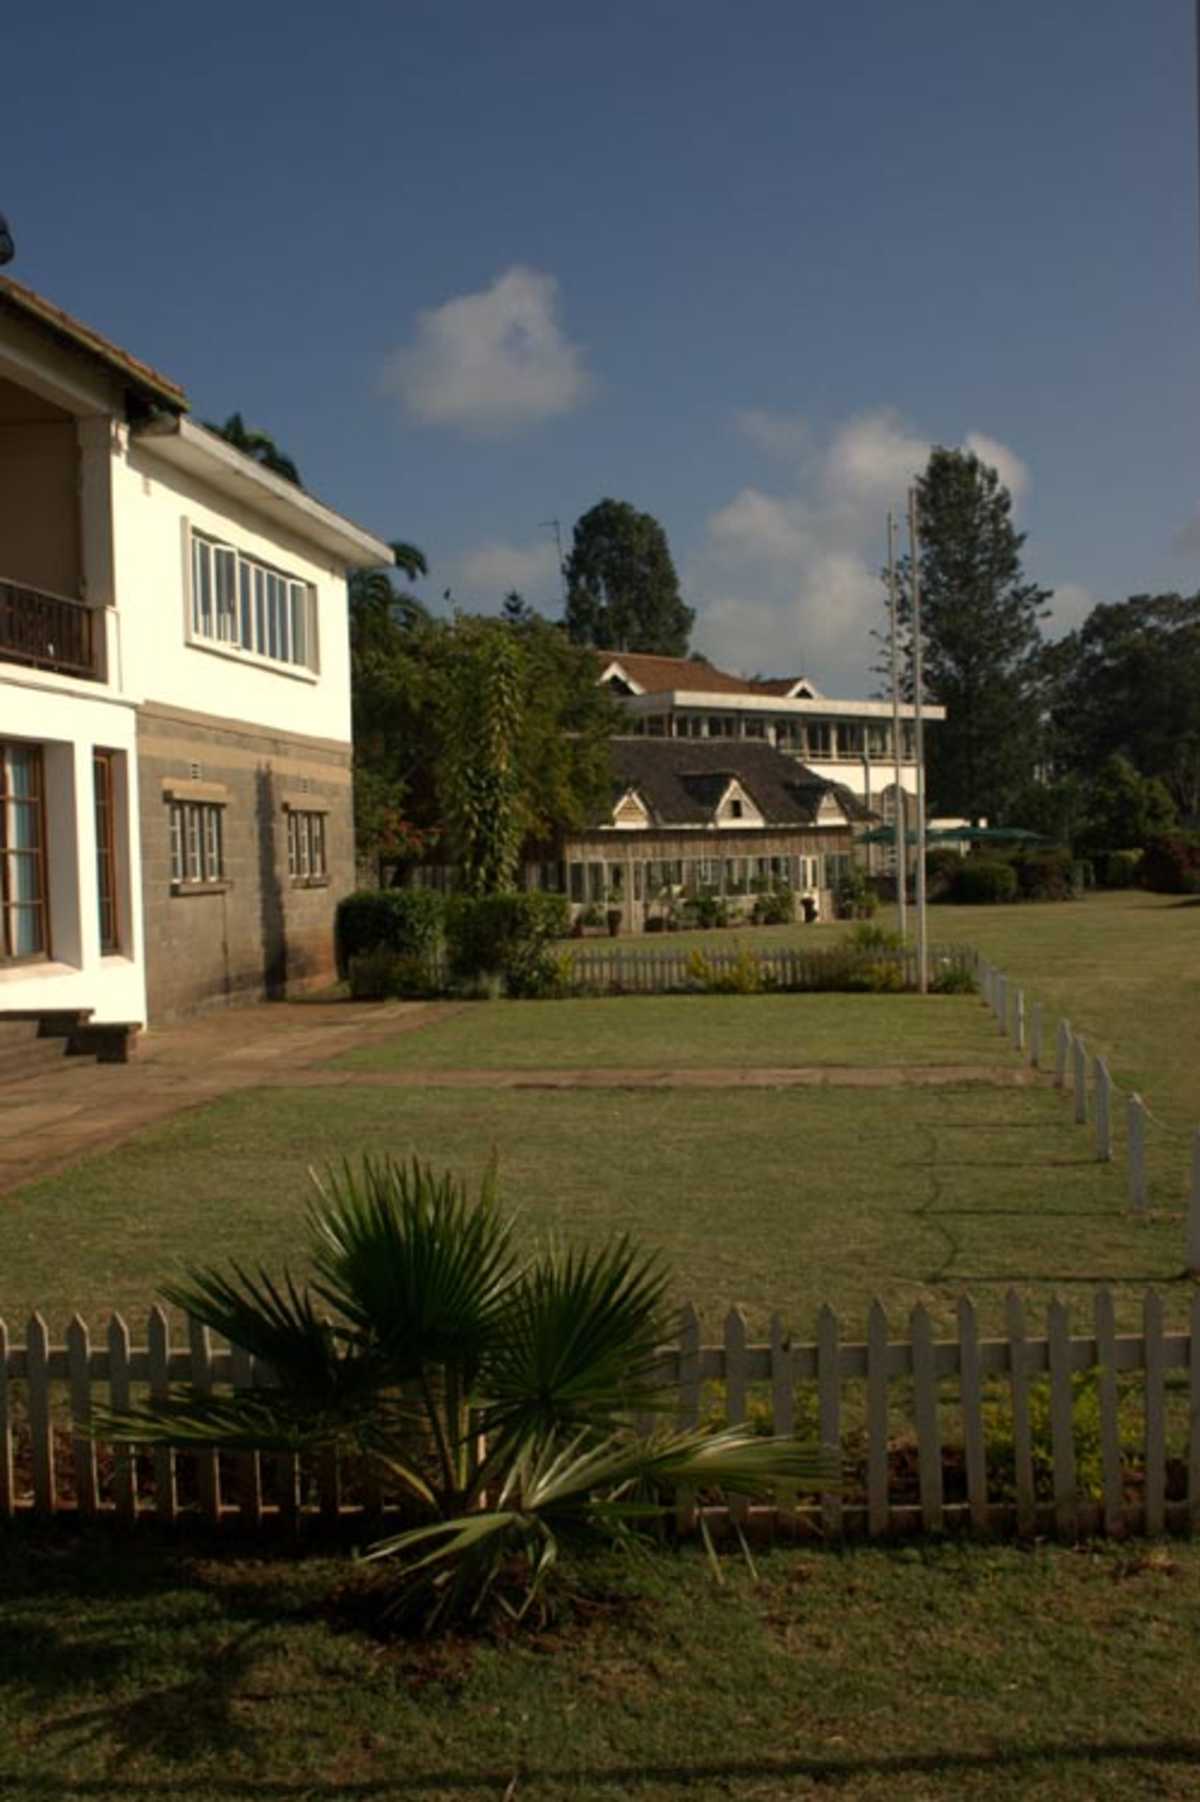 The Nairobi Club, January 28, 2007